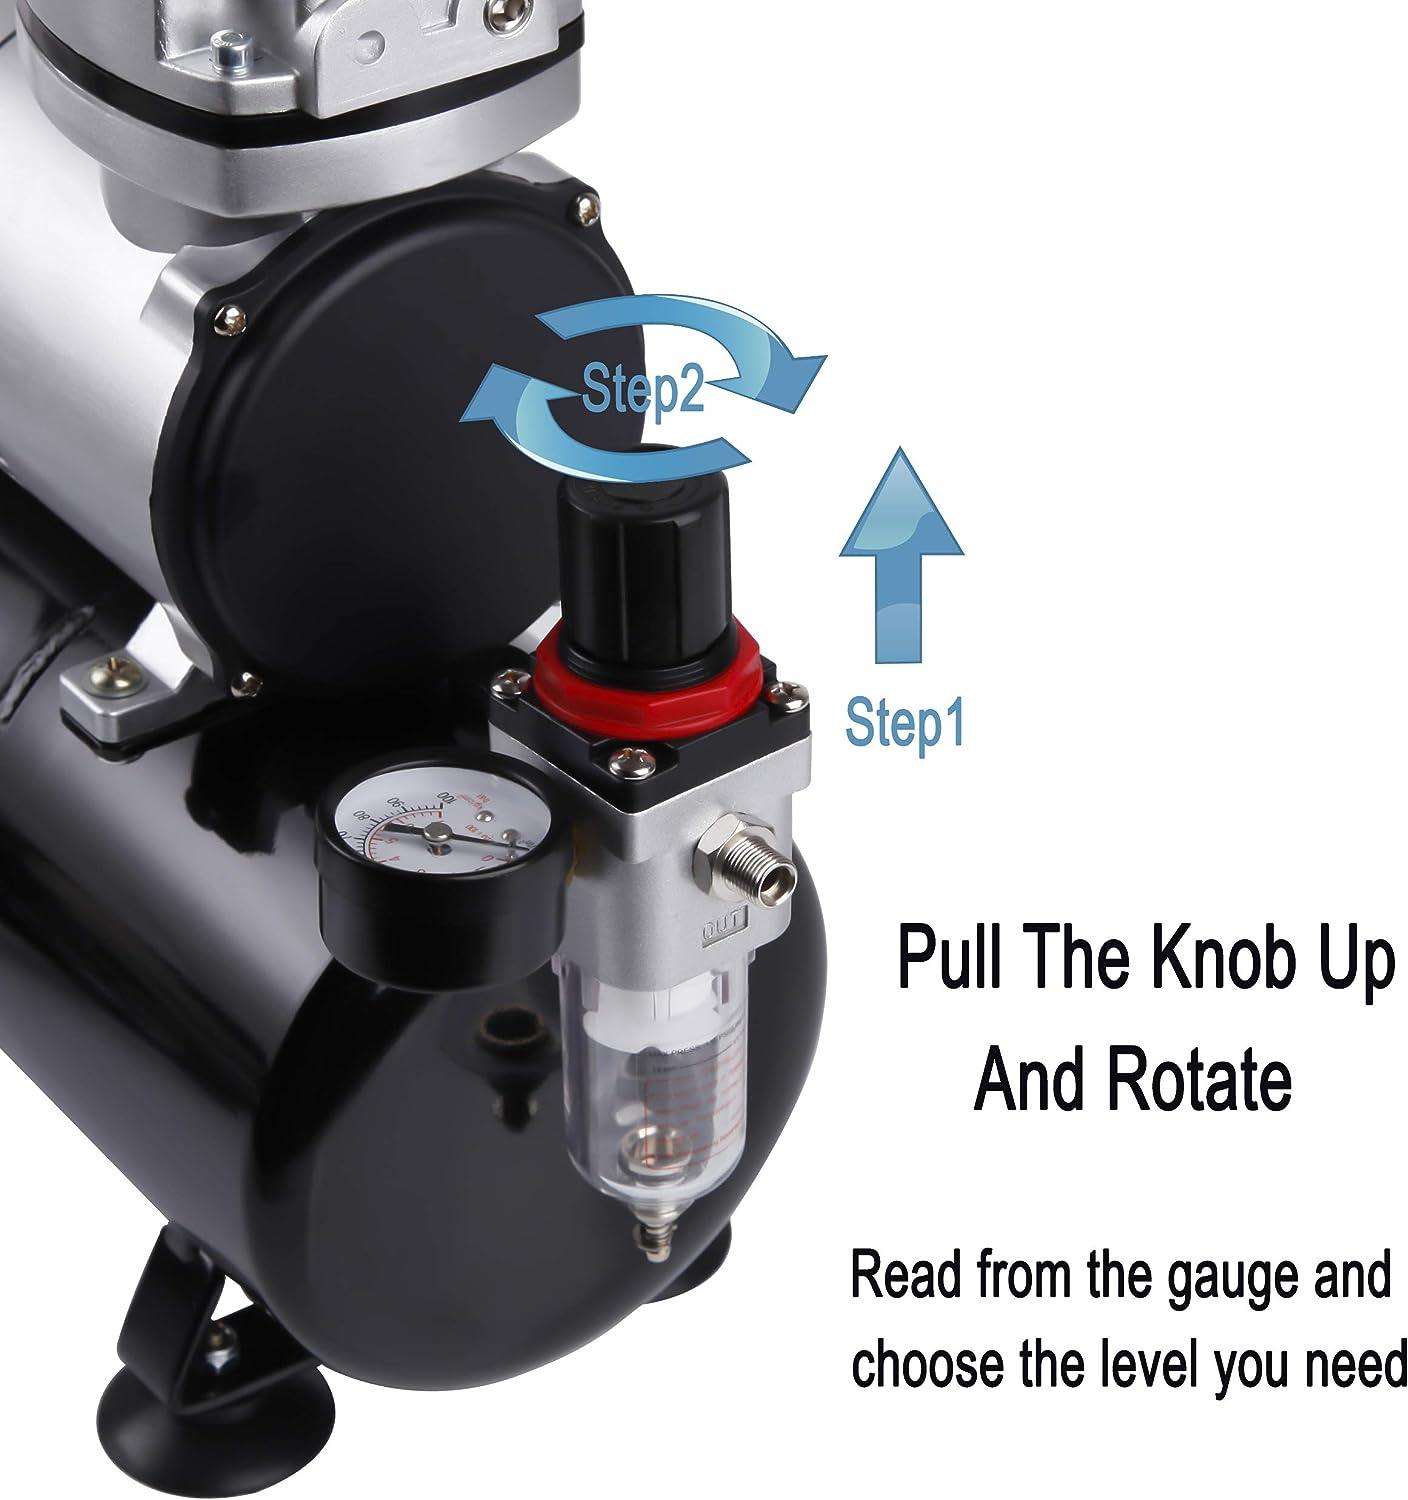 Kkmoon Professional Airbrush Air Compressor Kit Oil-less Quiet